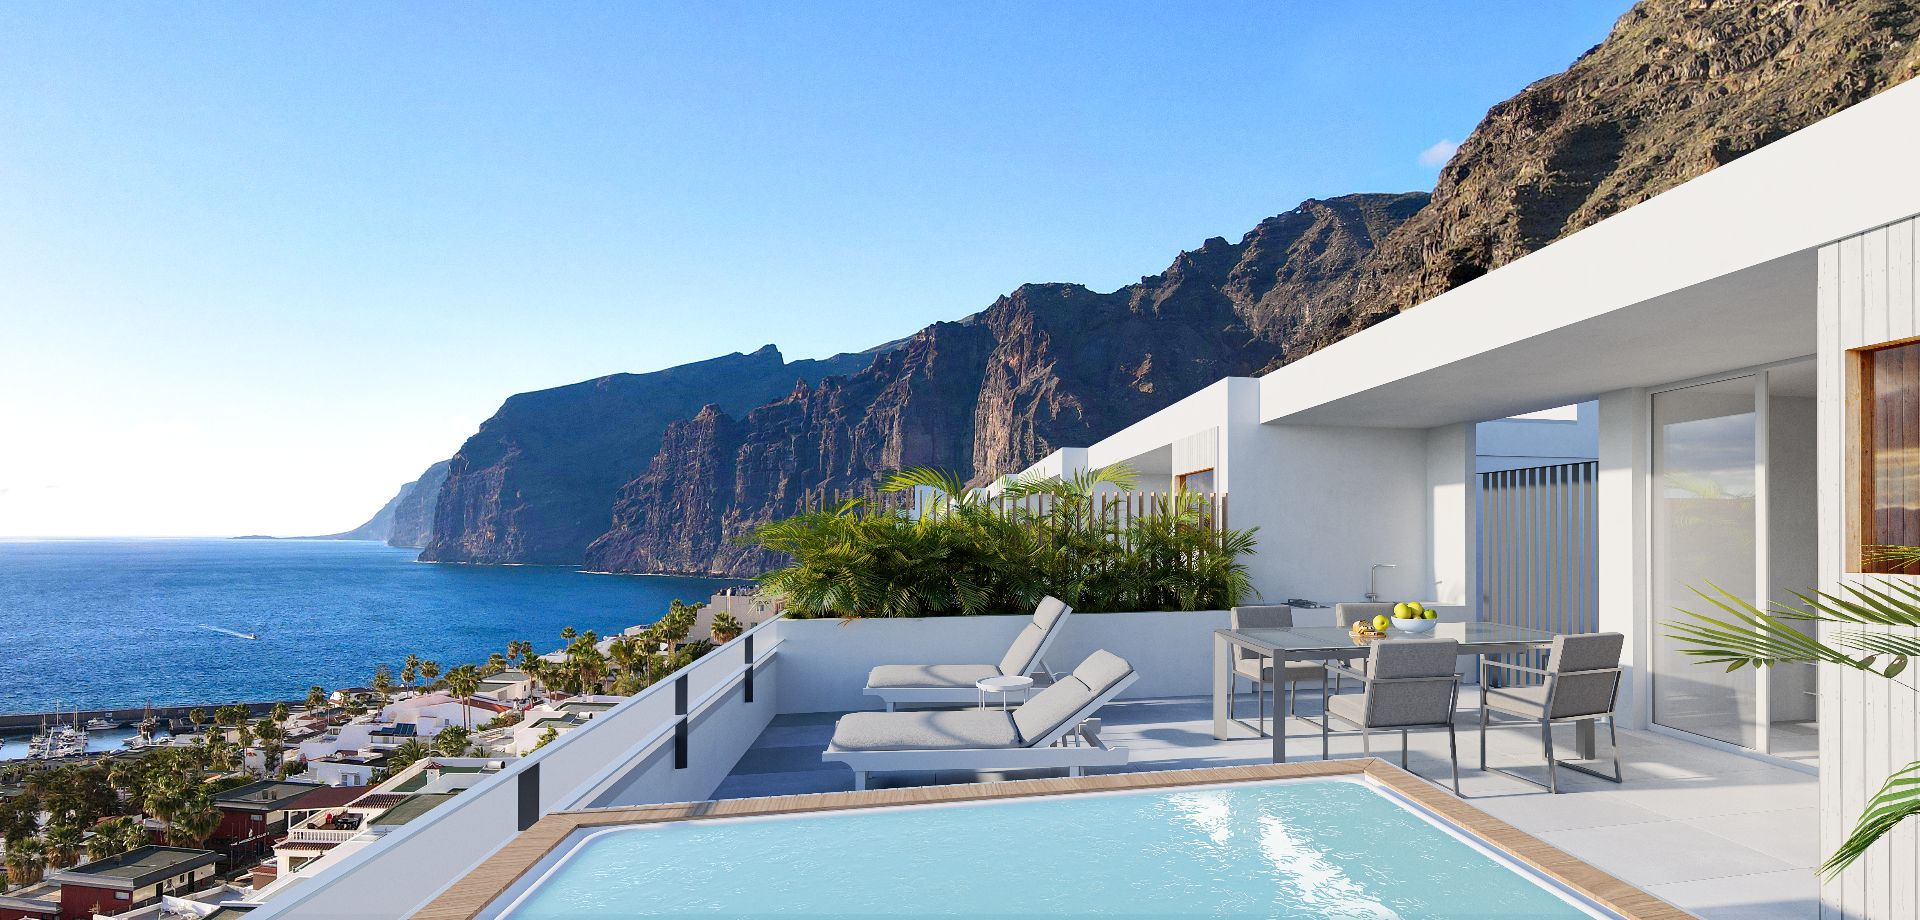 Aqua Suites Luxury Penthouse with panoramic seaviews.